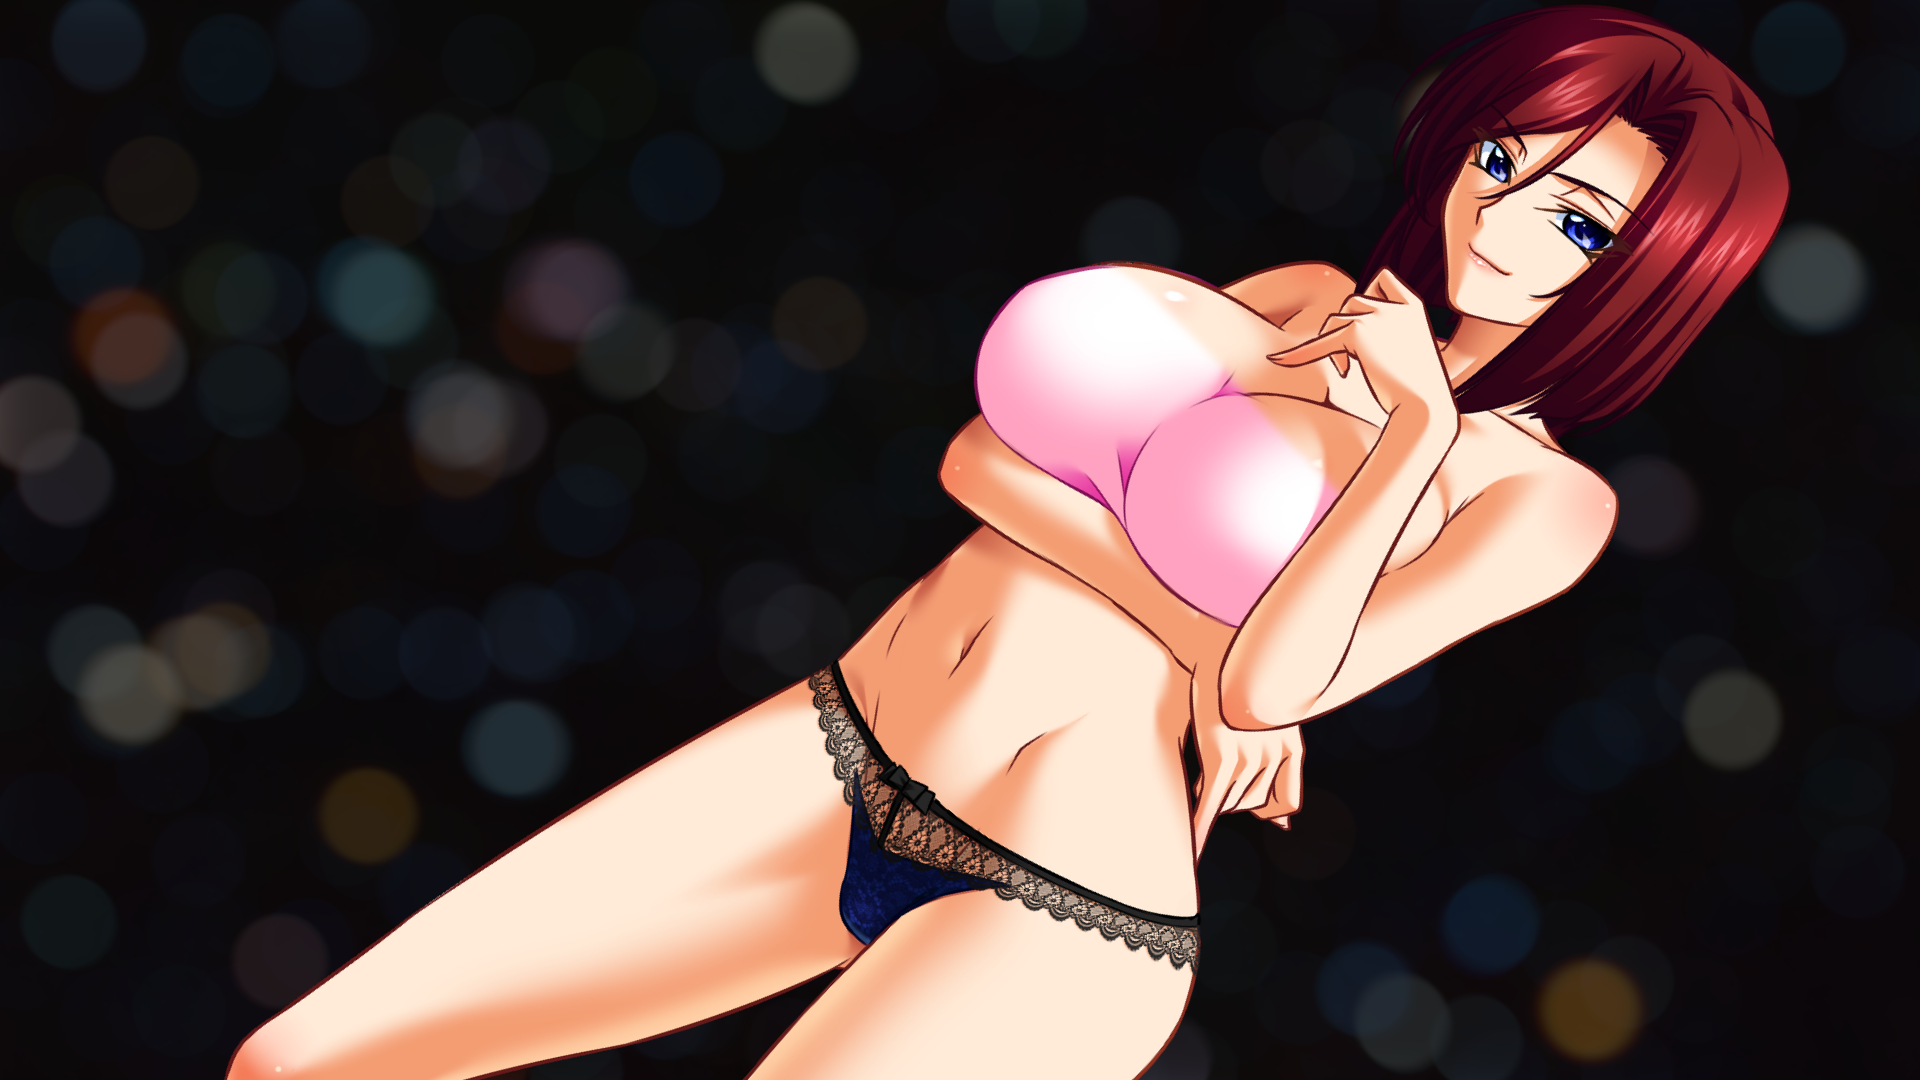 Anime 1920x1080 kagami boobs big boobs huge breasts anime girls anime redhead panties blue eyes lace underwear